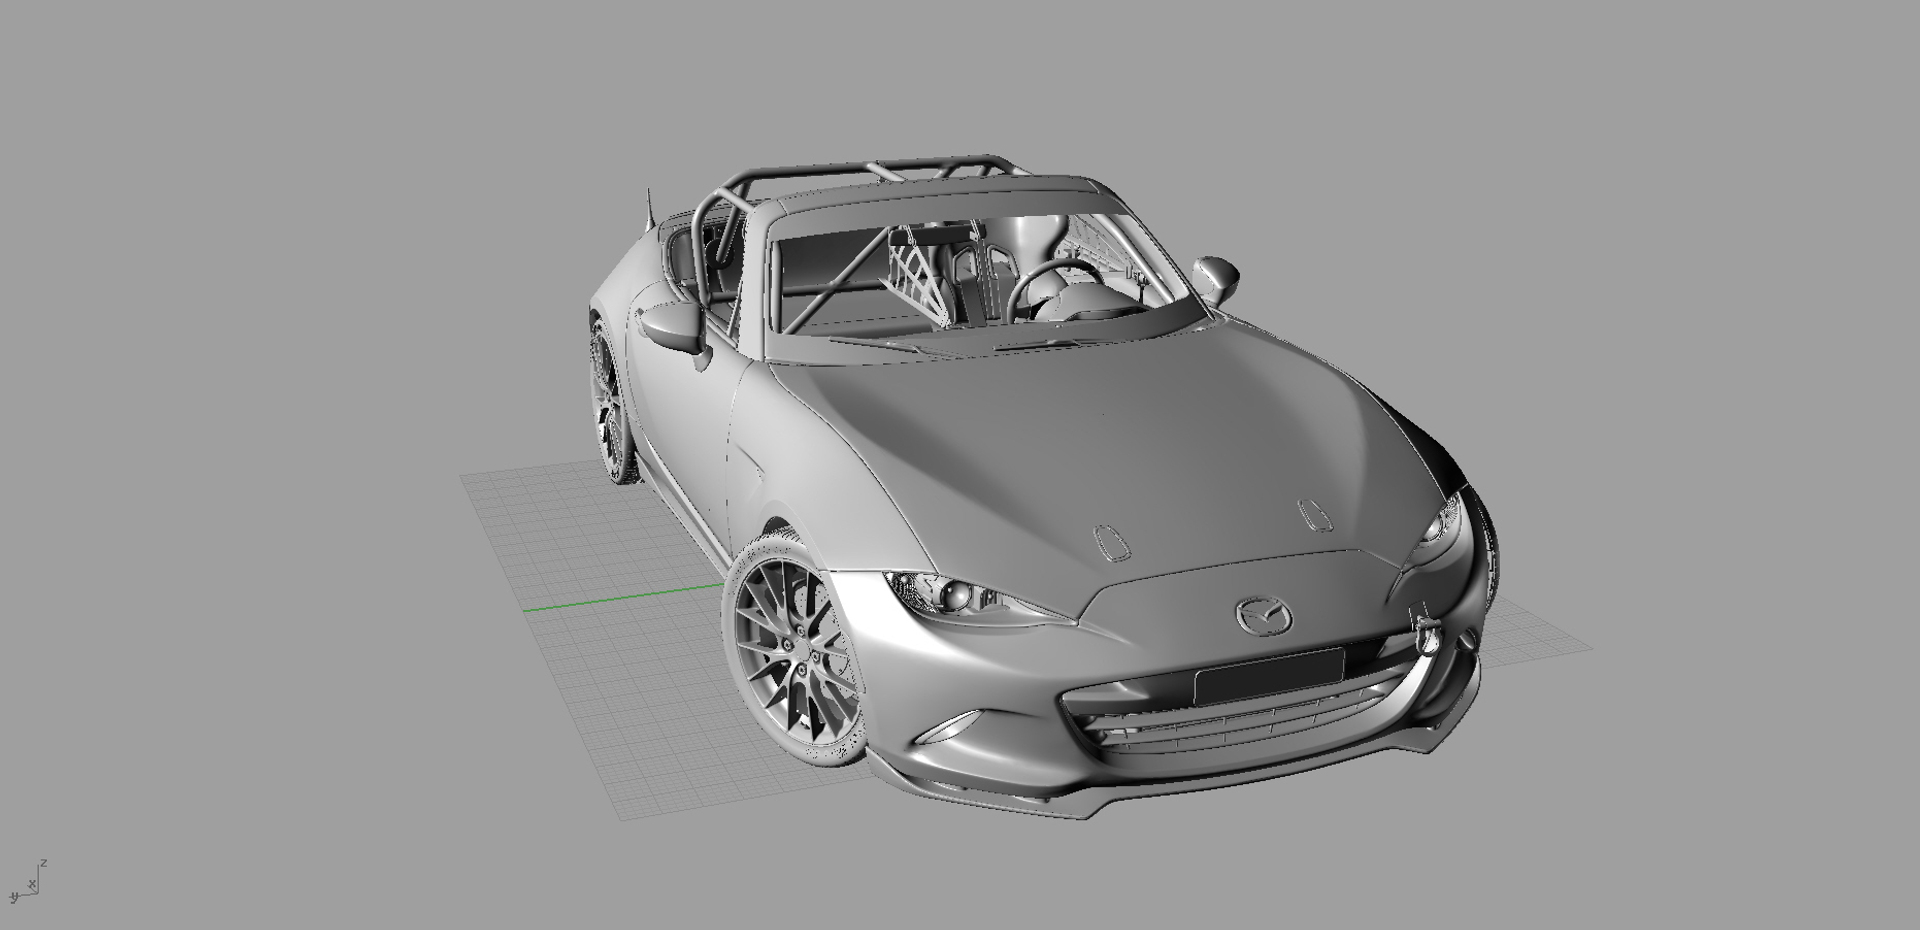 Mazda MX-5 2016 CUP Race Car 3D Model $129 - .3ds .c4d .fbx .lwo